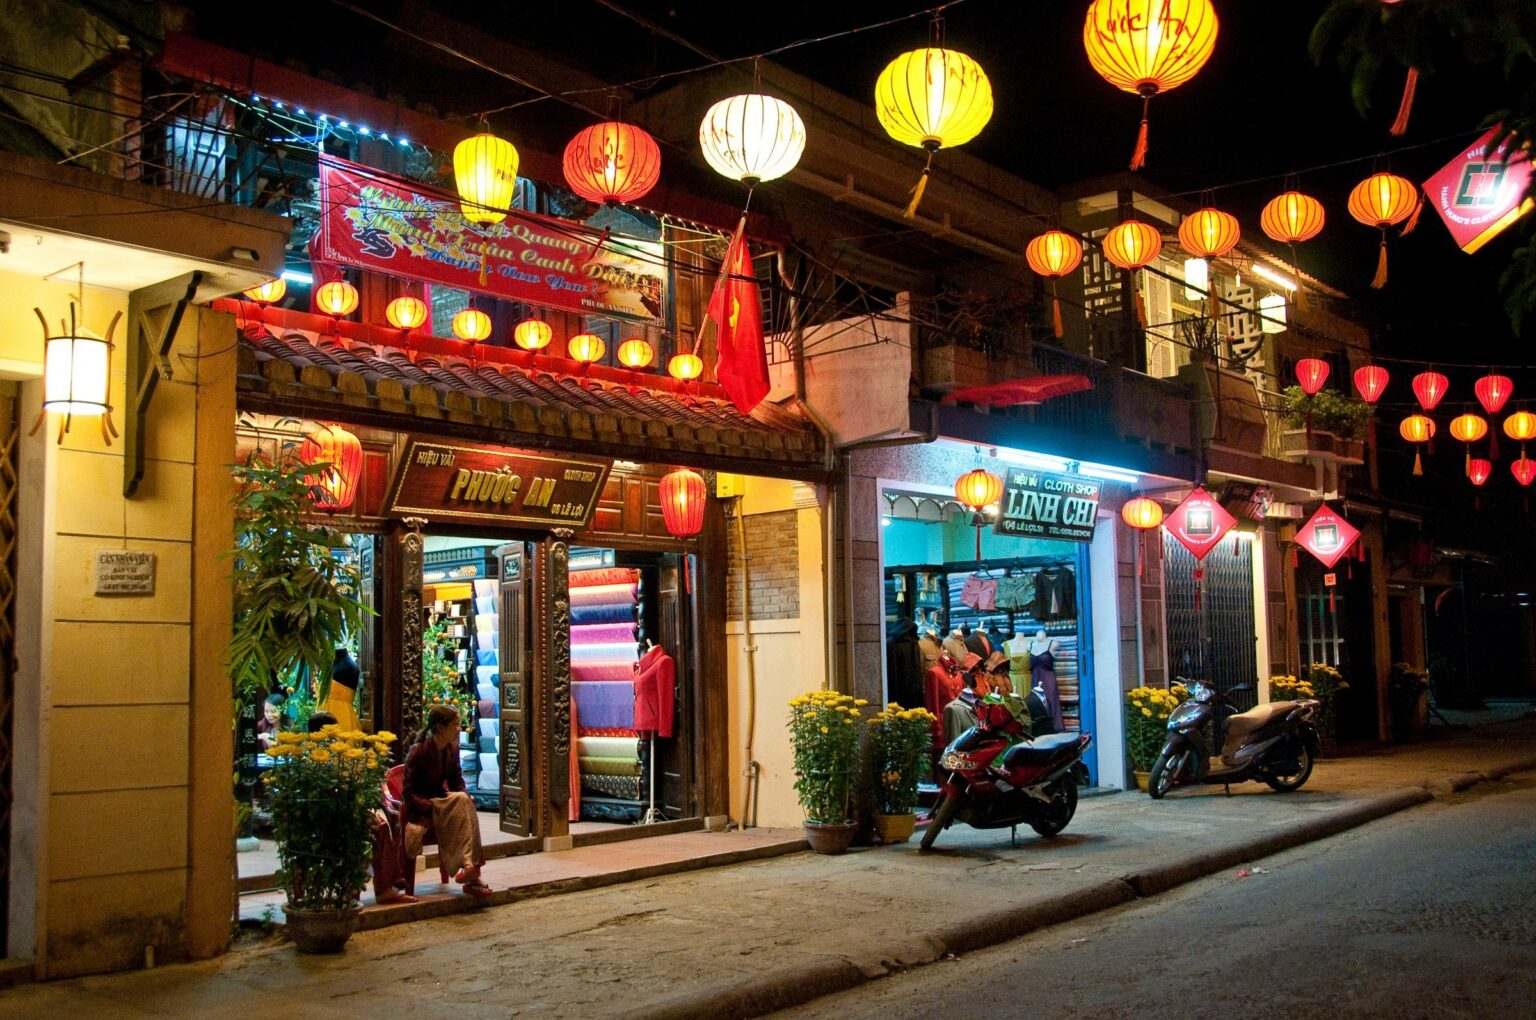 Hoi An Lantern Festival 2014 dates InsideVietnam Blog